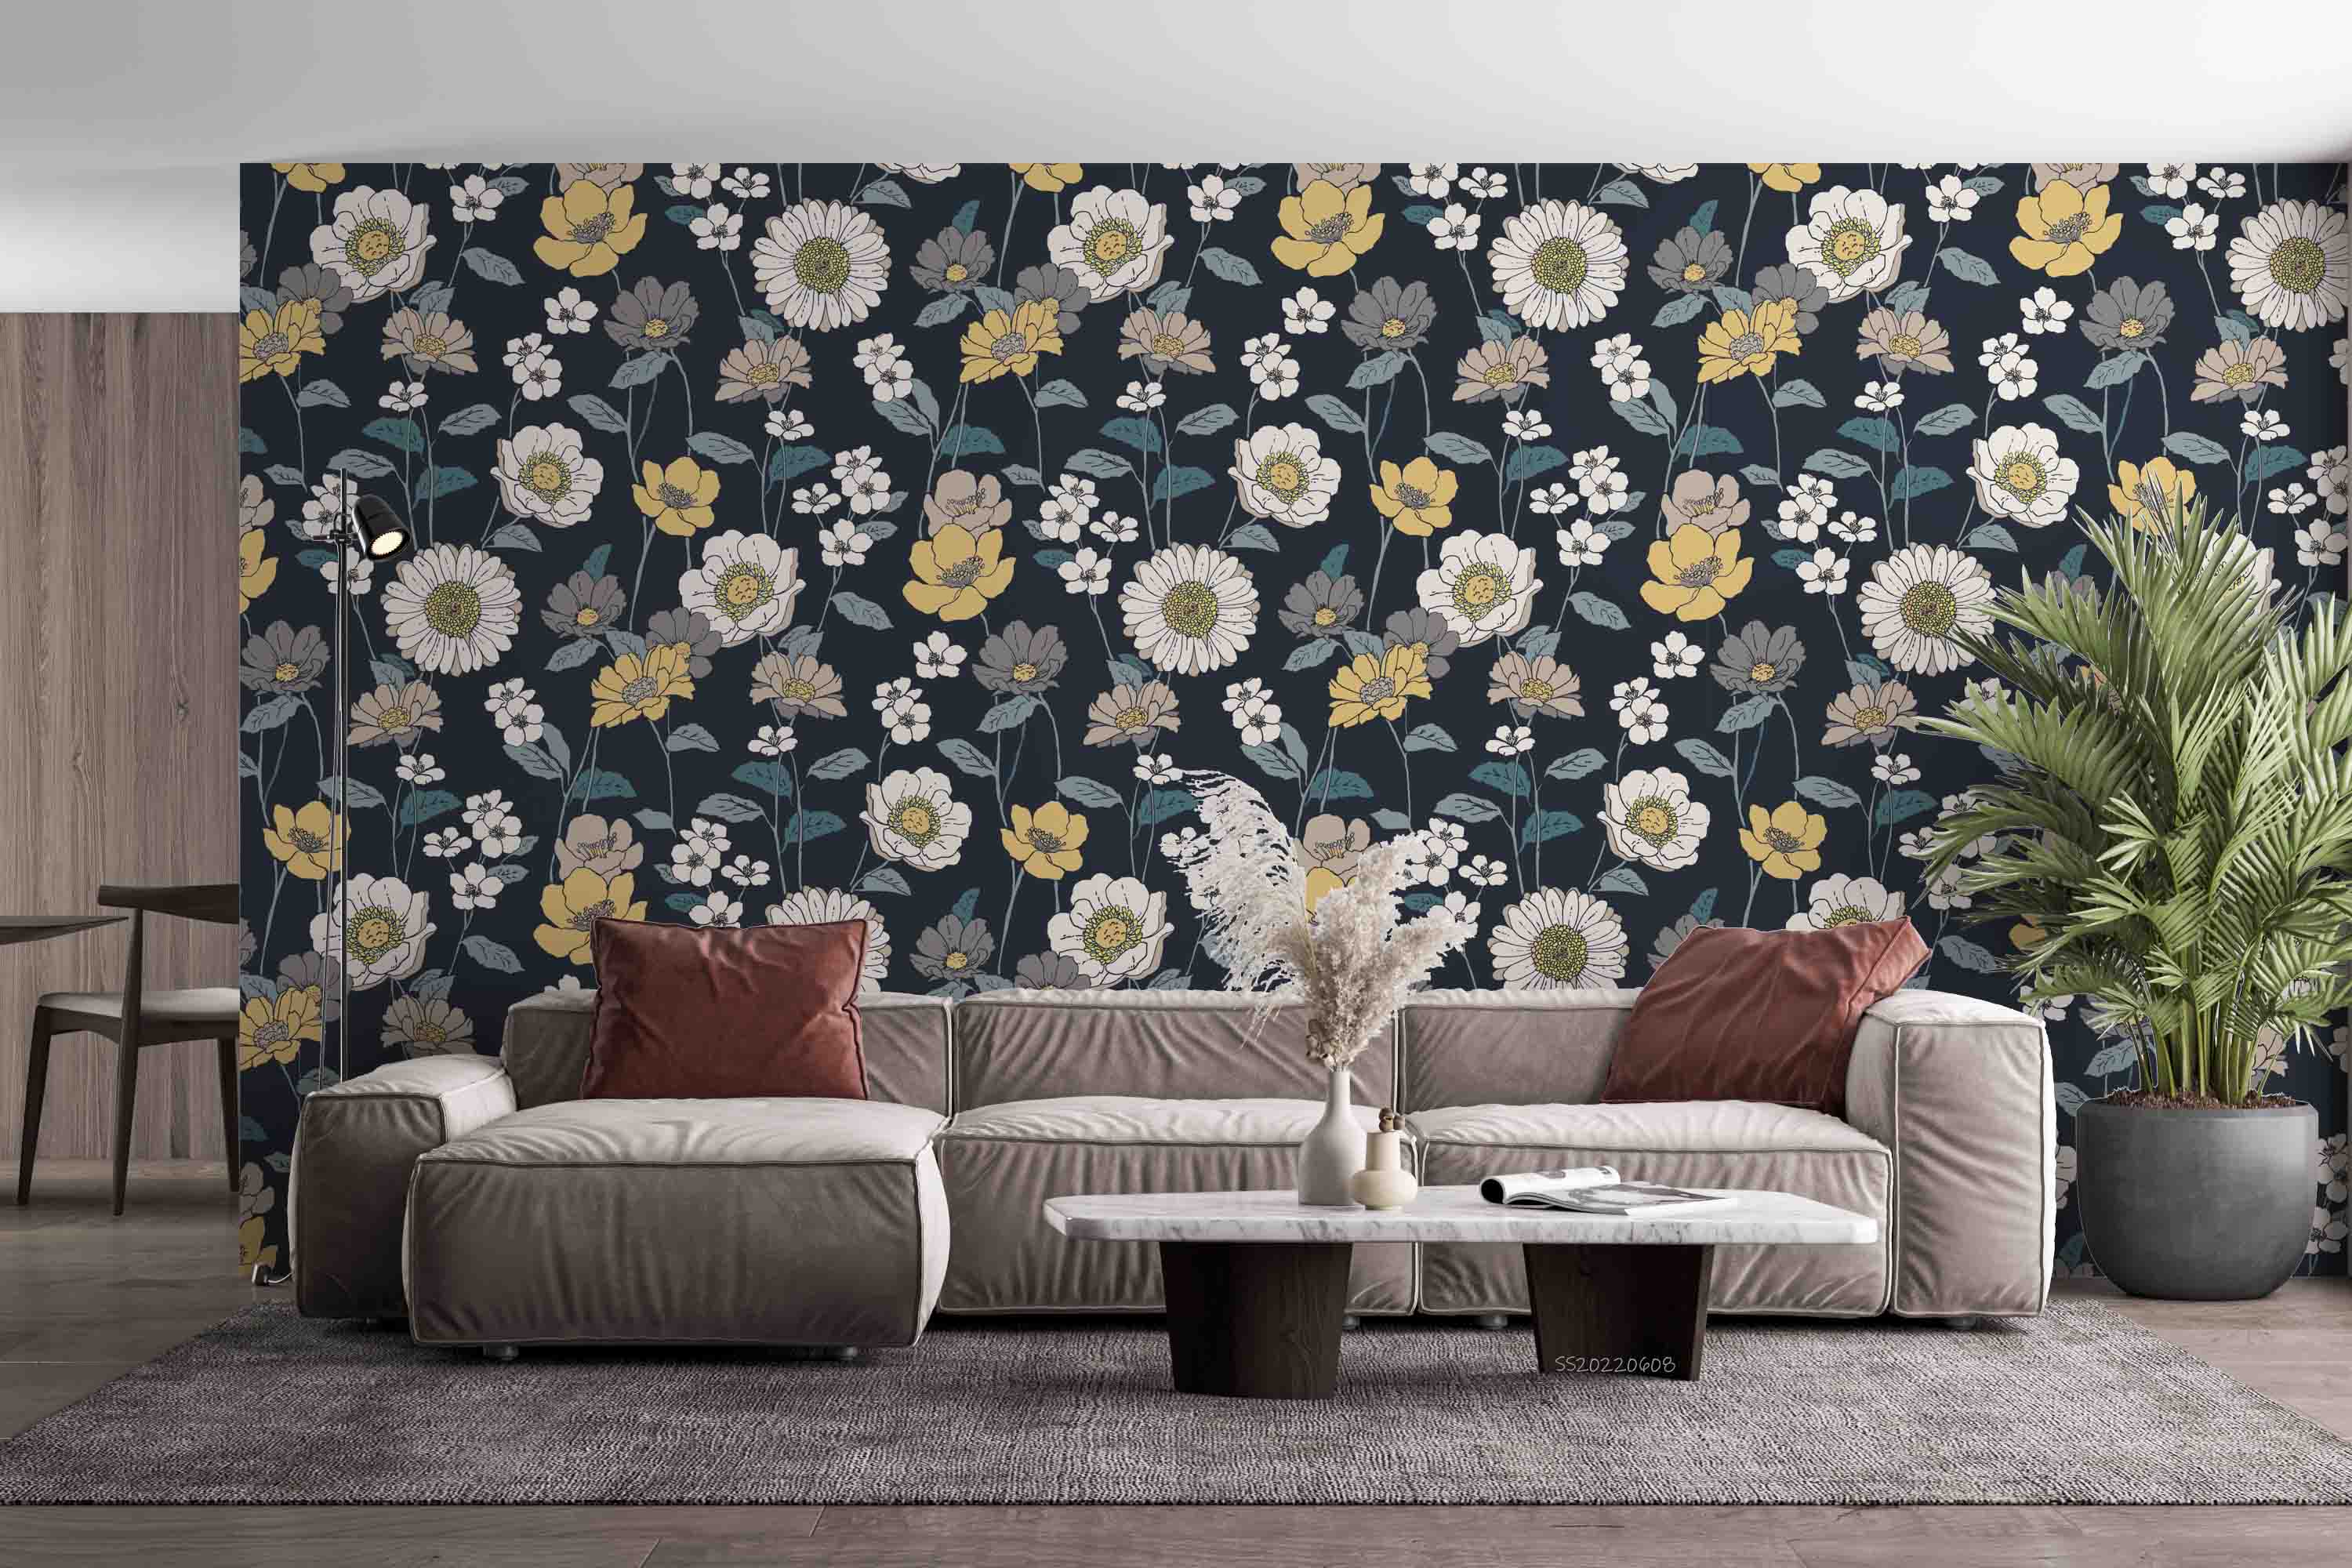 3D Vintage Floral Pattern Wall Mural Wallpaper GD 598- Jess Art Decoration